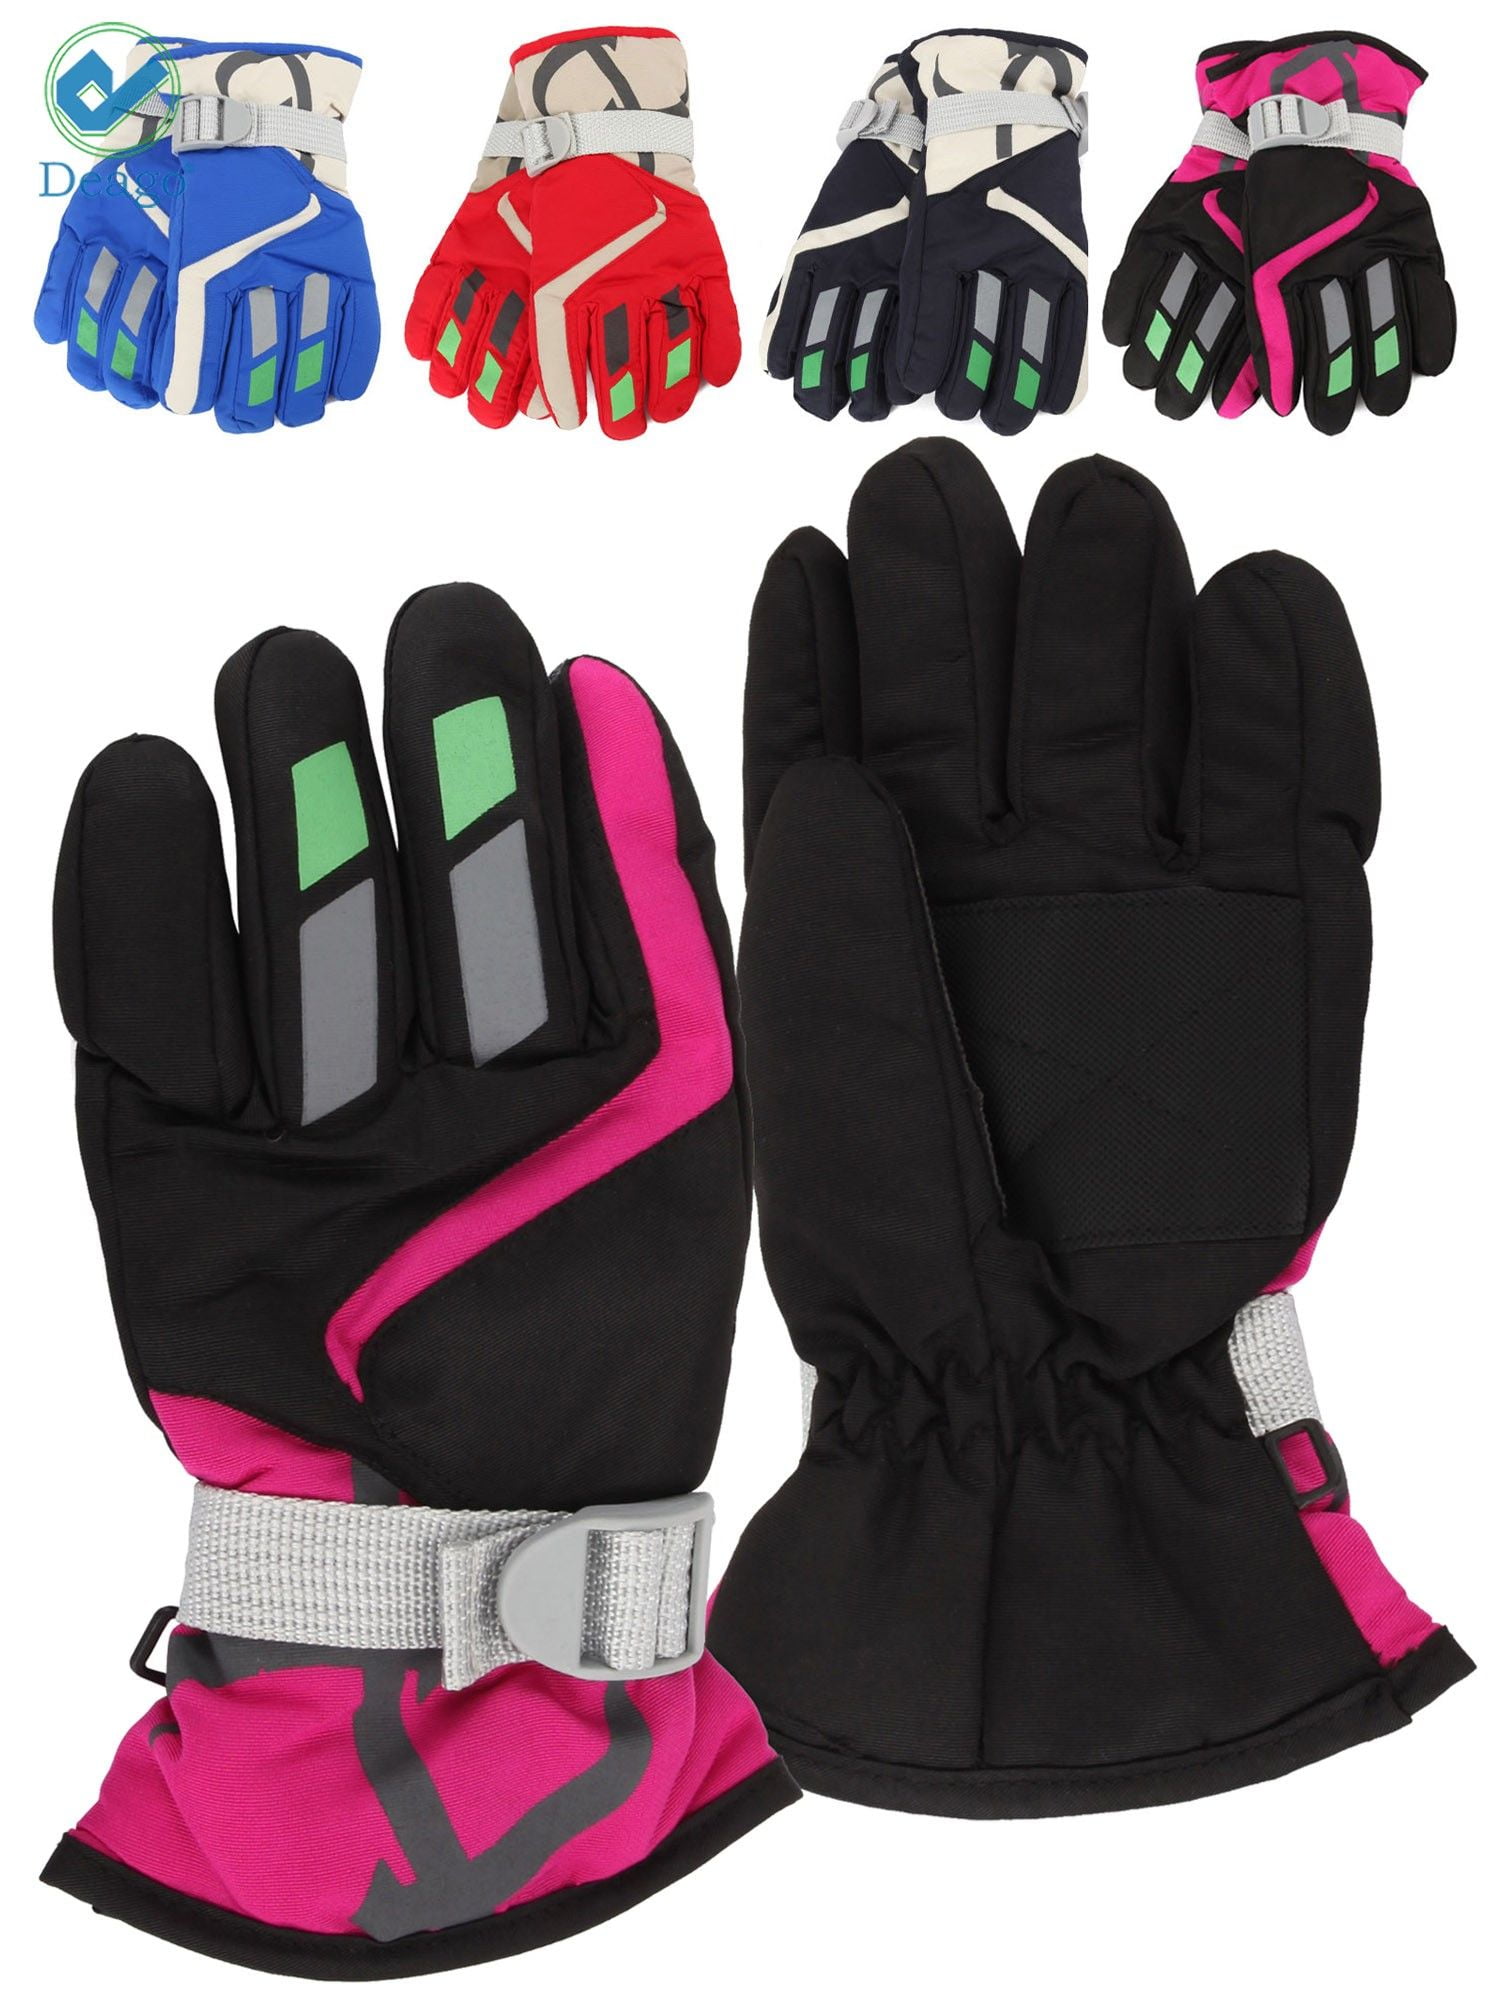 Snow & Ski Waterproof Youth Gloves for Boys & Girls Kids Winter Gloves 